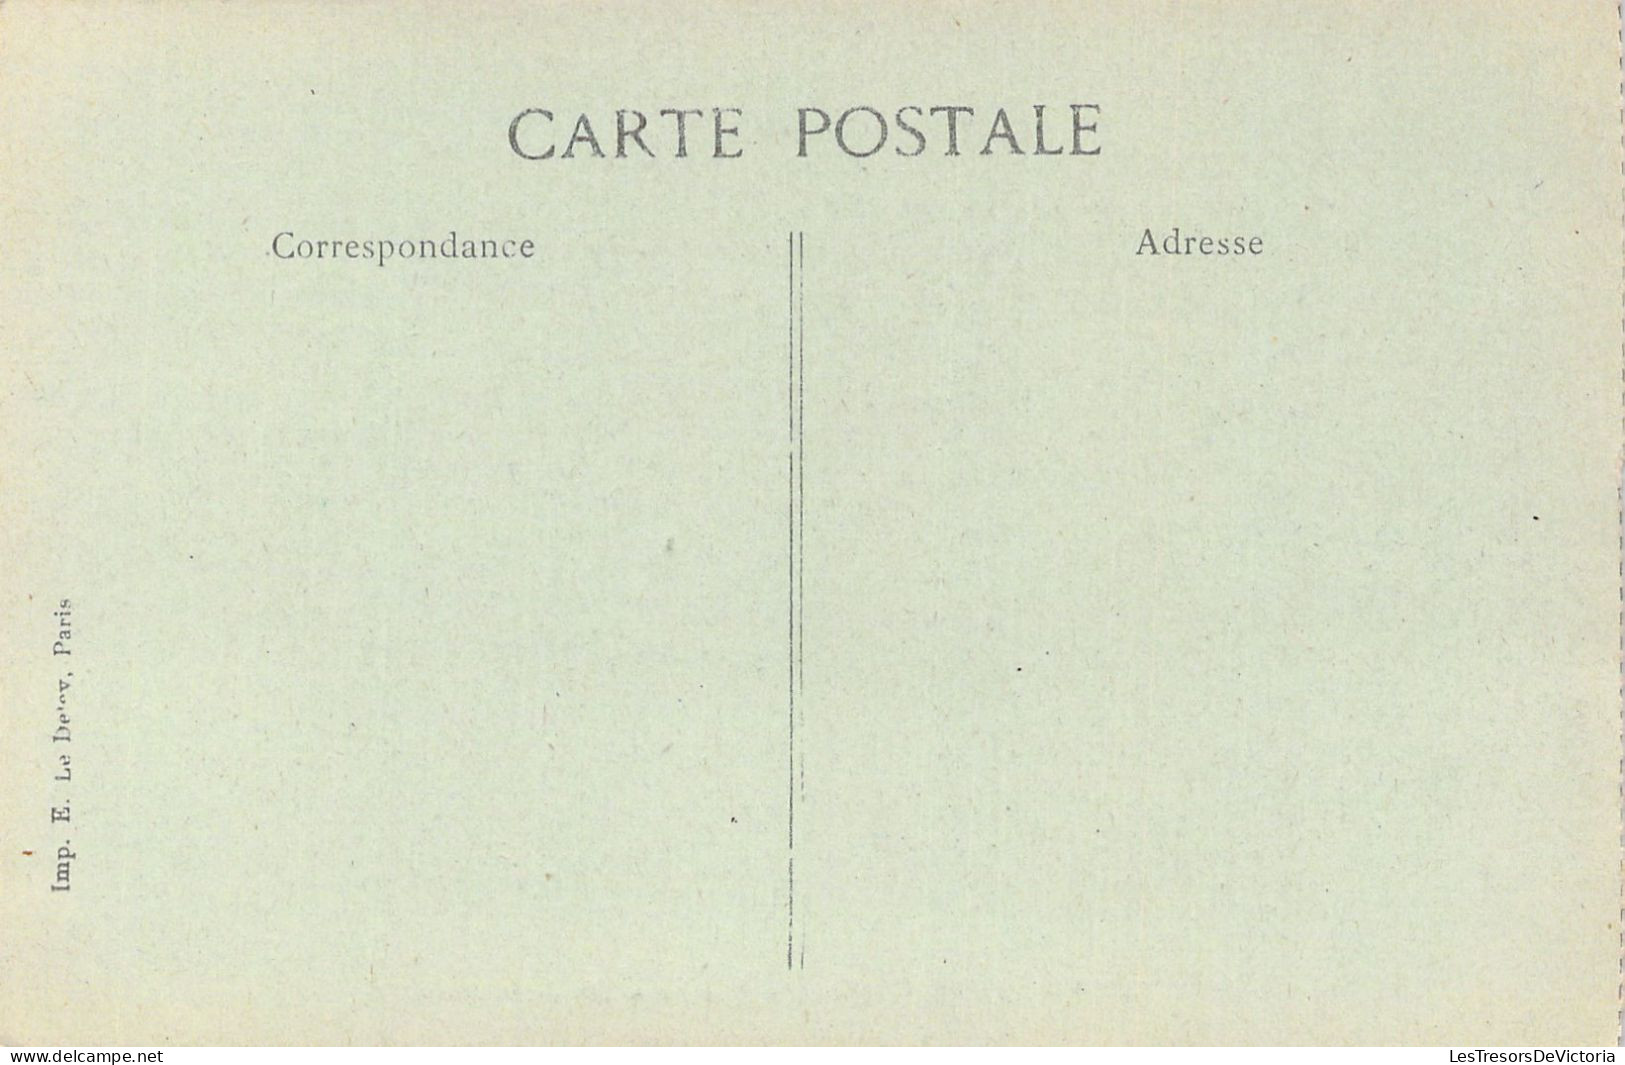 MILITARIA - NIMES - Quartier Bruyère - 38e D'Artillerie - Carte Postale Ancienne - Casernas